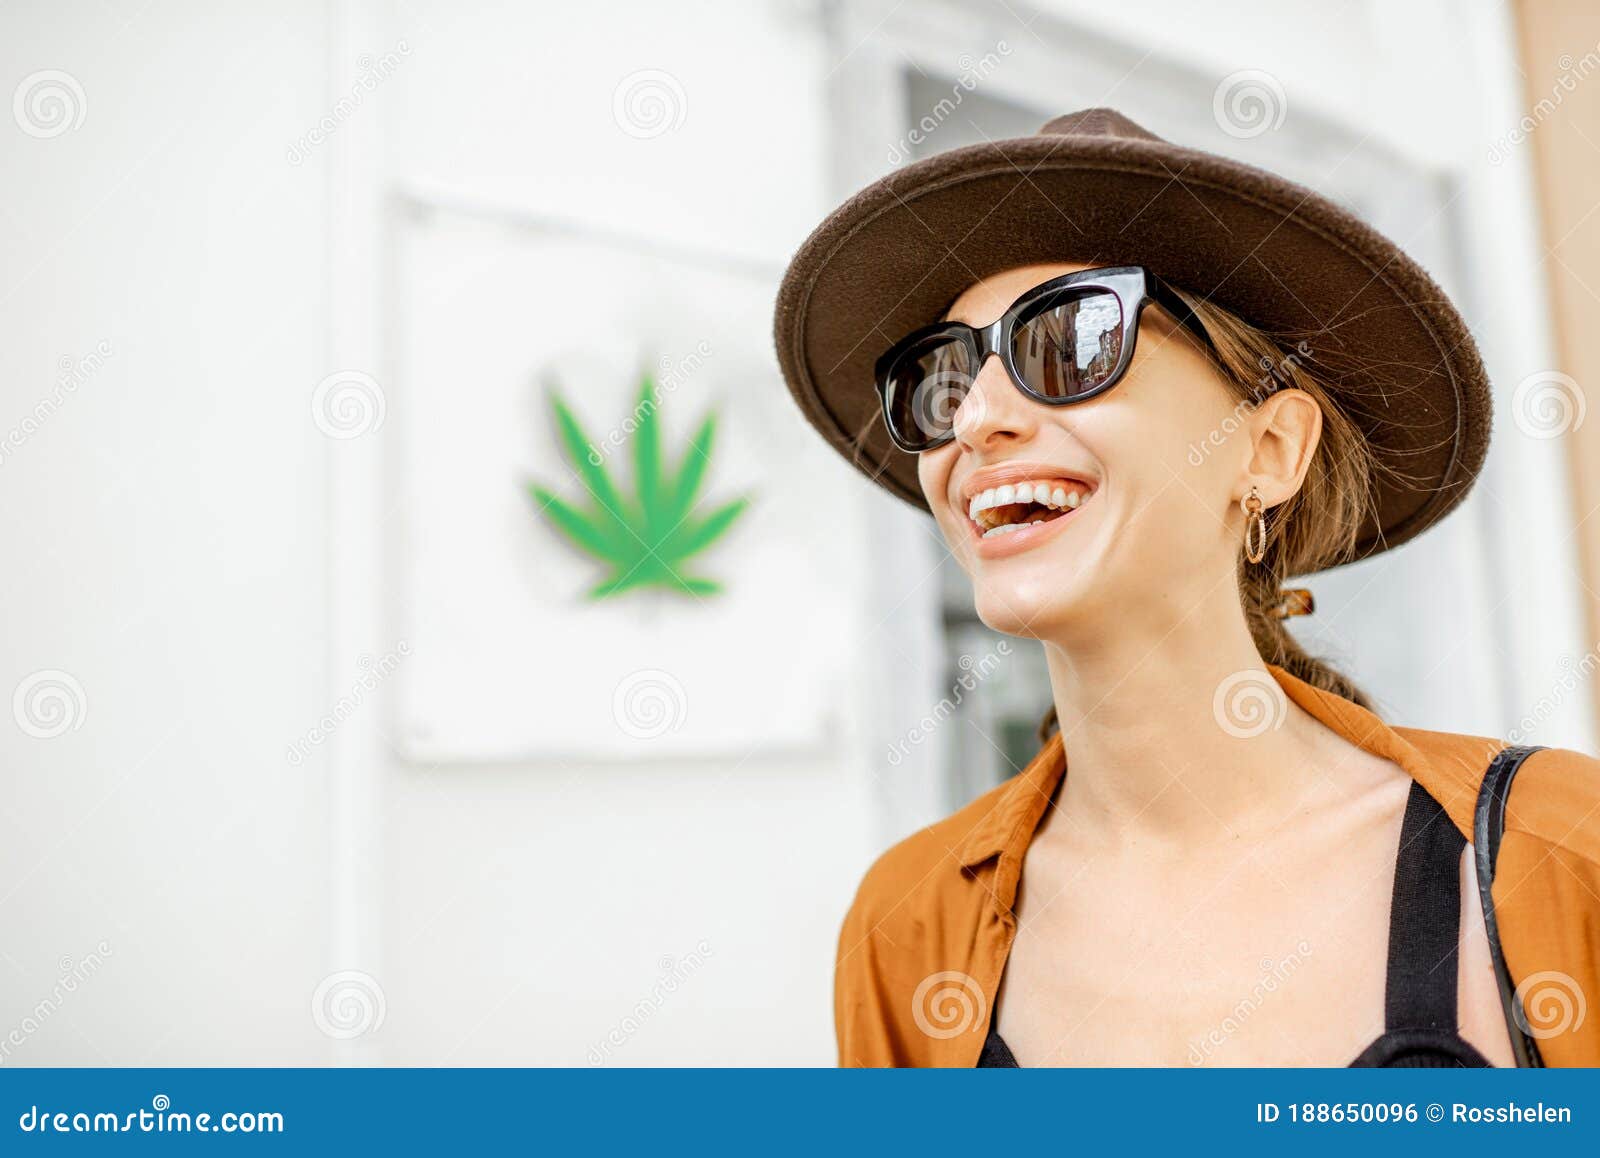 Фото конопли и женщин марихуана твиттер